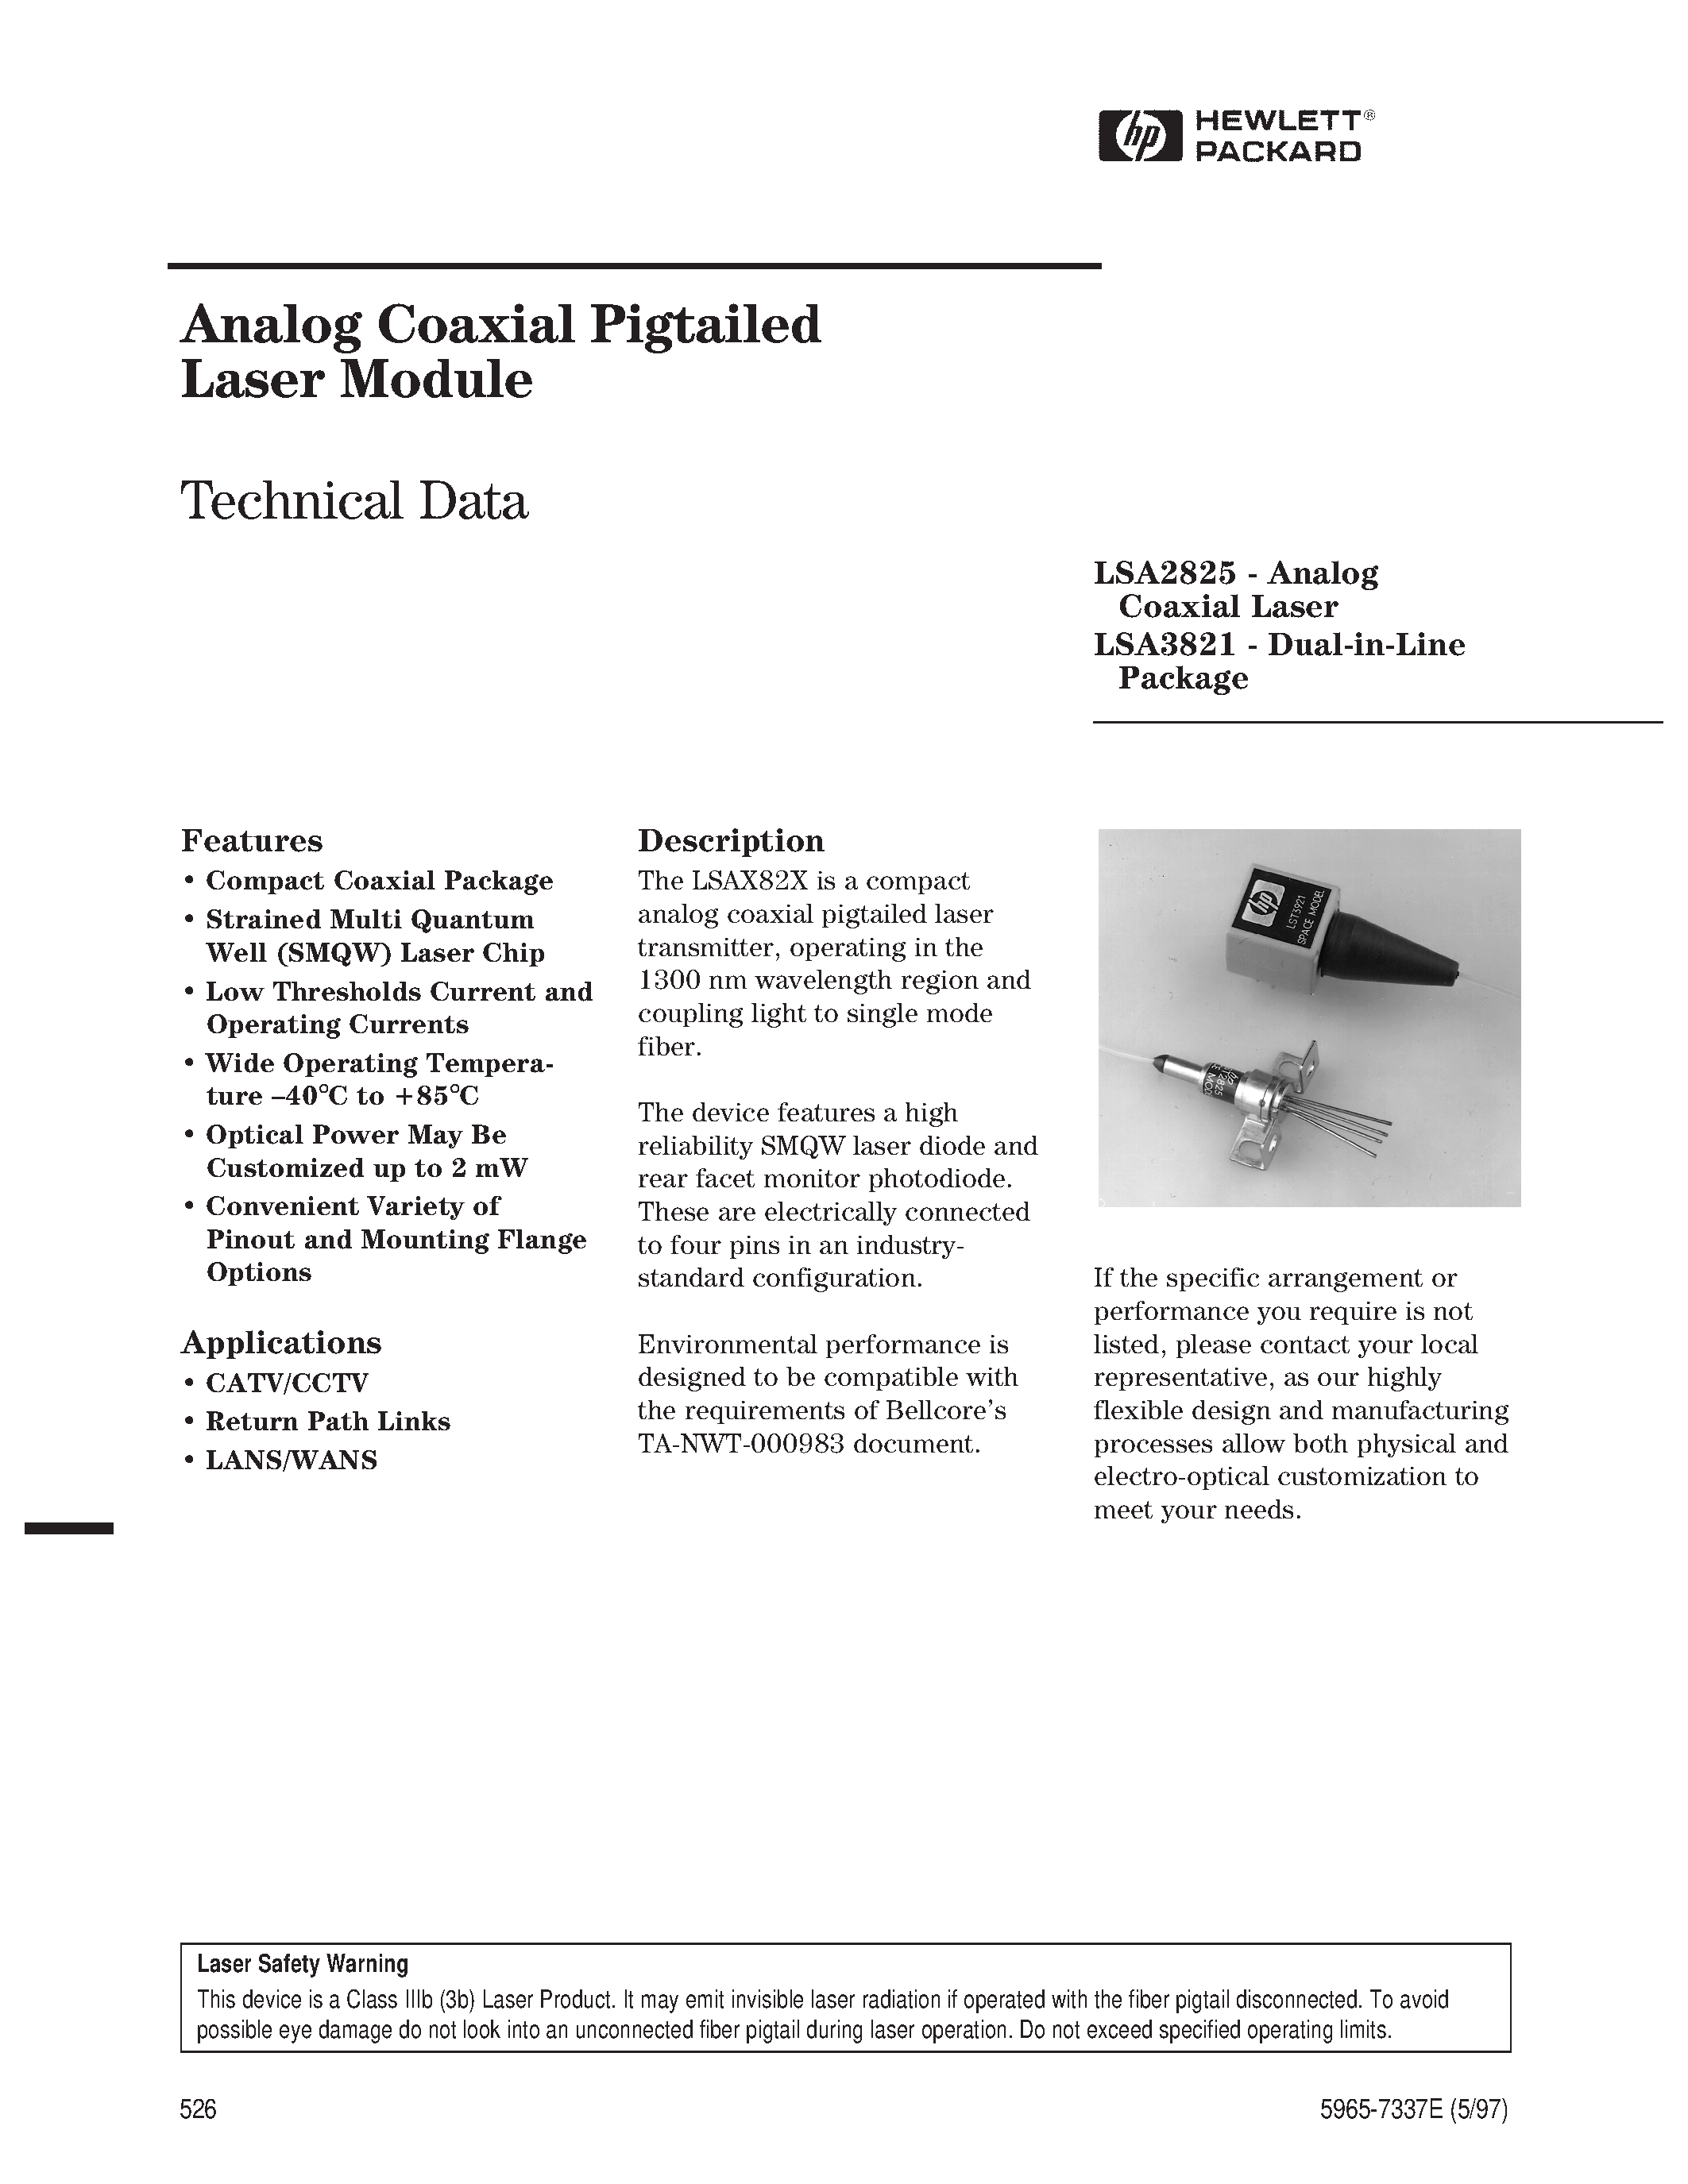 Datasheet LSA2825-B-US - Analog Coaxial Pigtailed Laser Module page 1